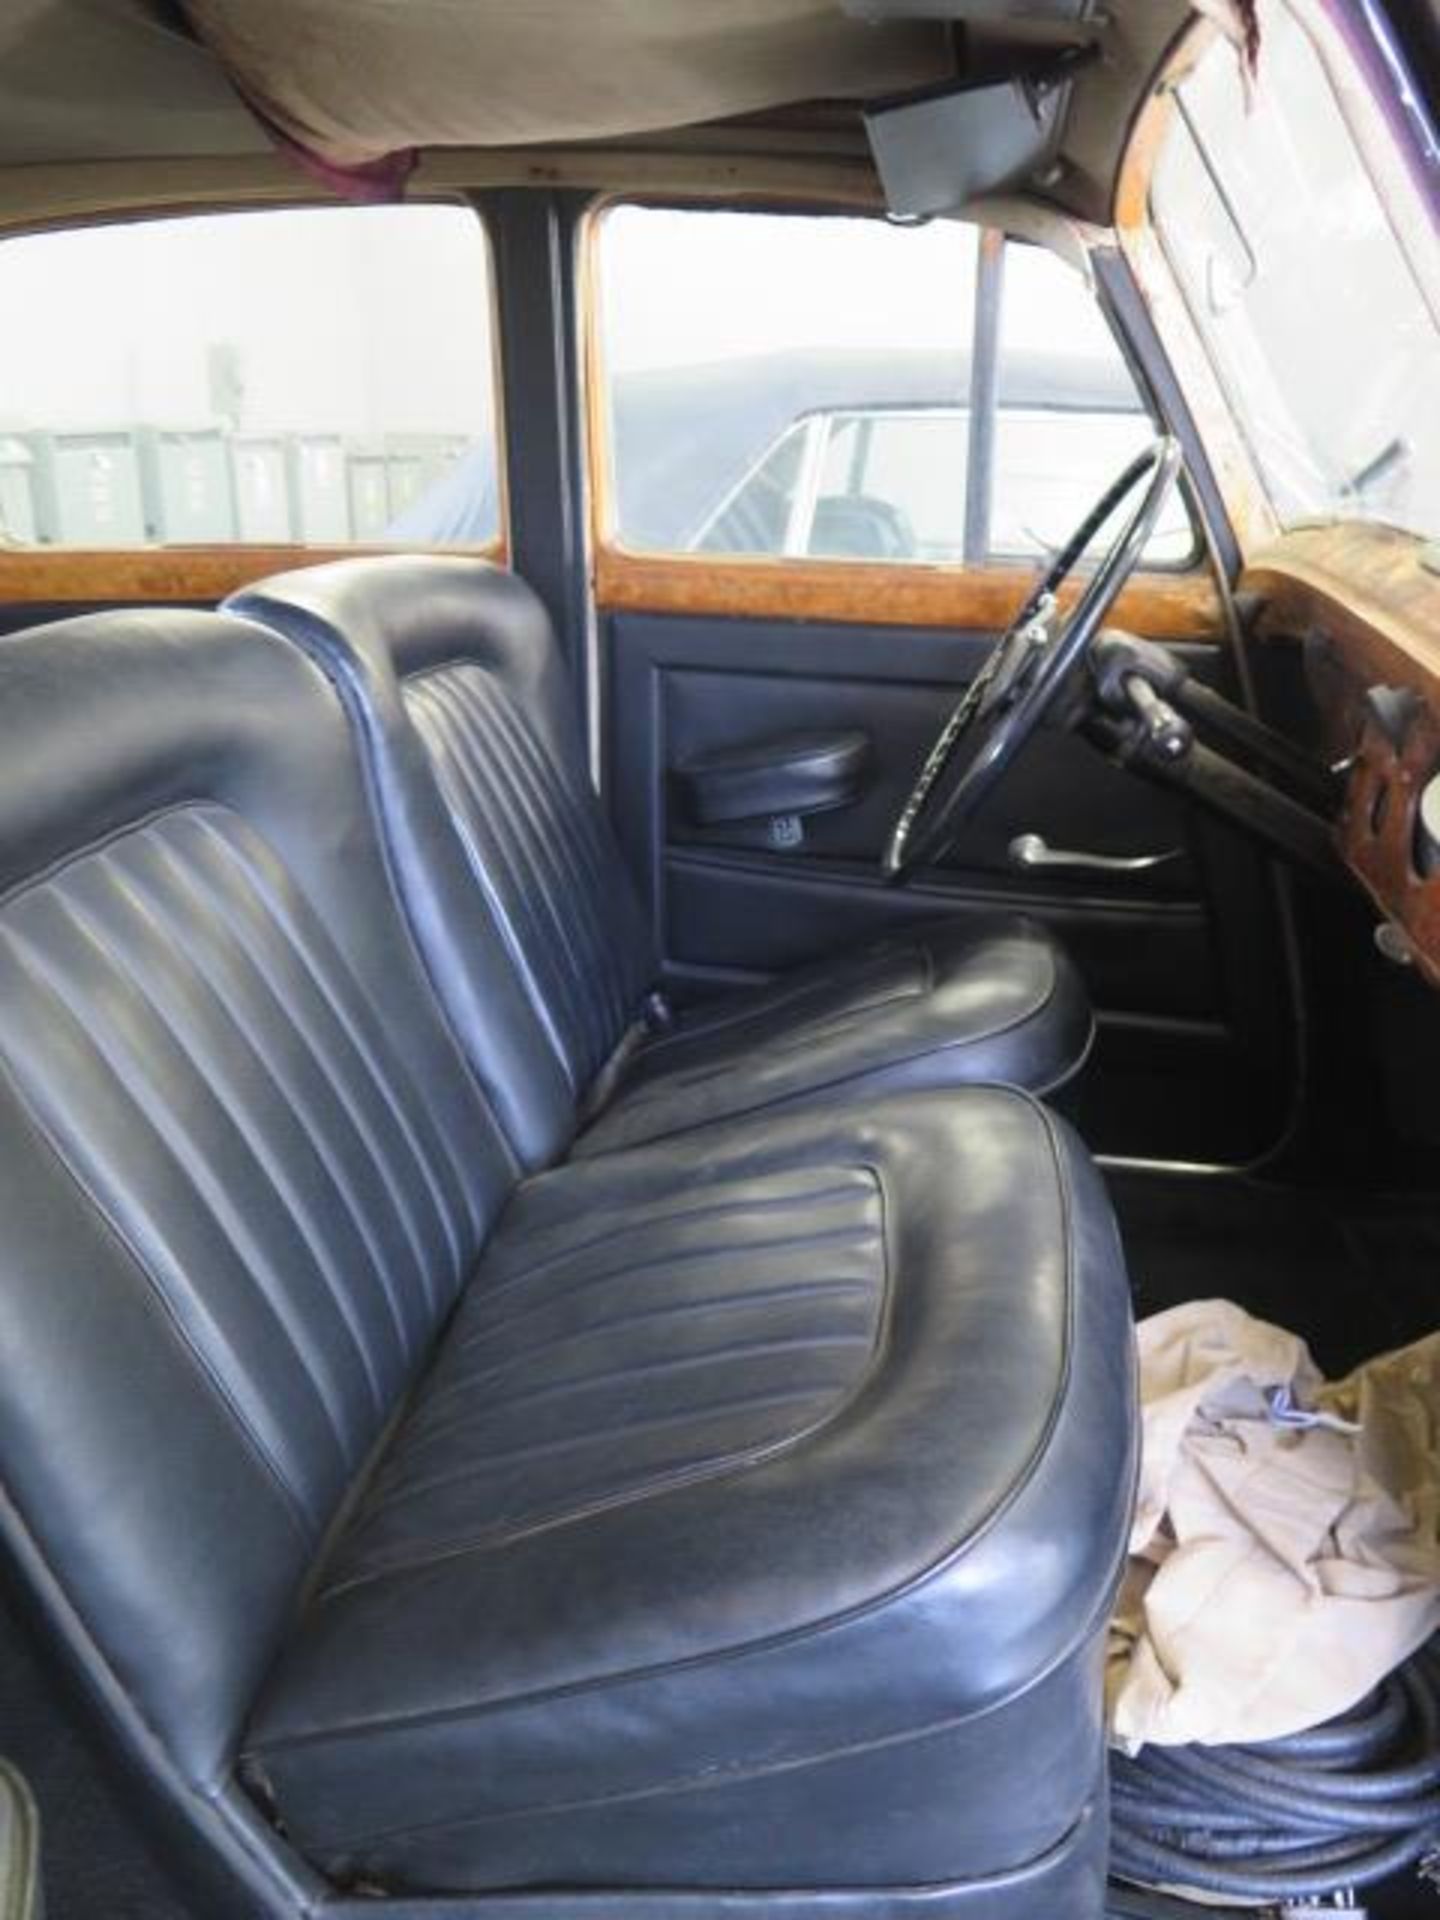 1952 Rolls Royce Silver Dawn Sedan Lics# 2DXP115 w/ Left Hand Steering, Gas, s/n S-78-C, SOLD AS IS - Image 18 of 38